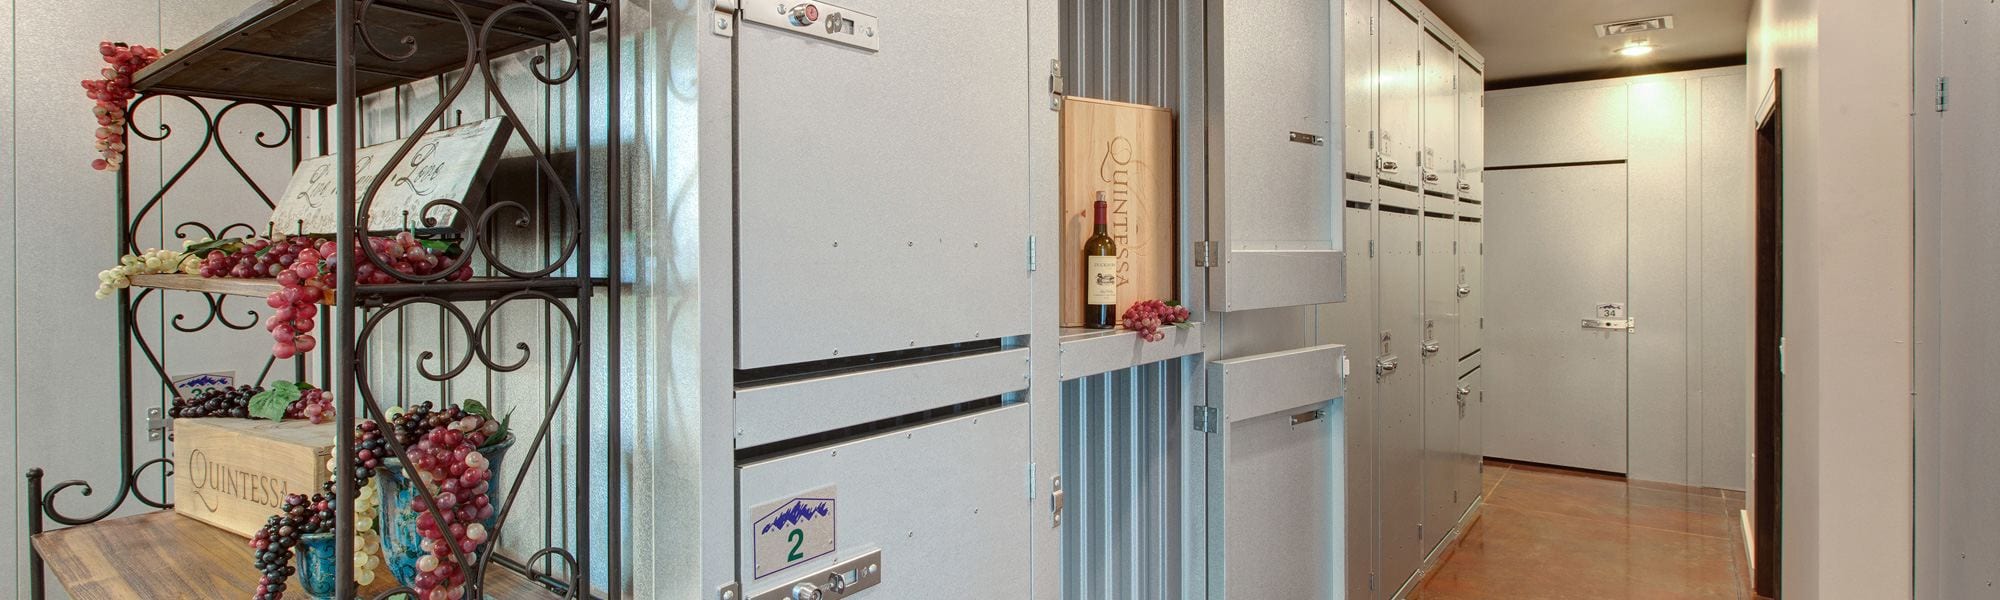 image of wine storage